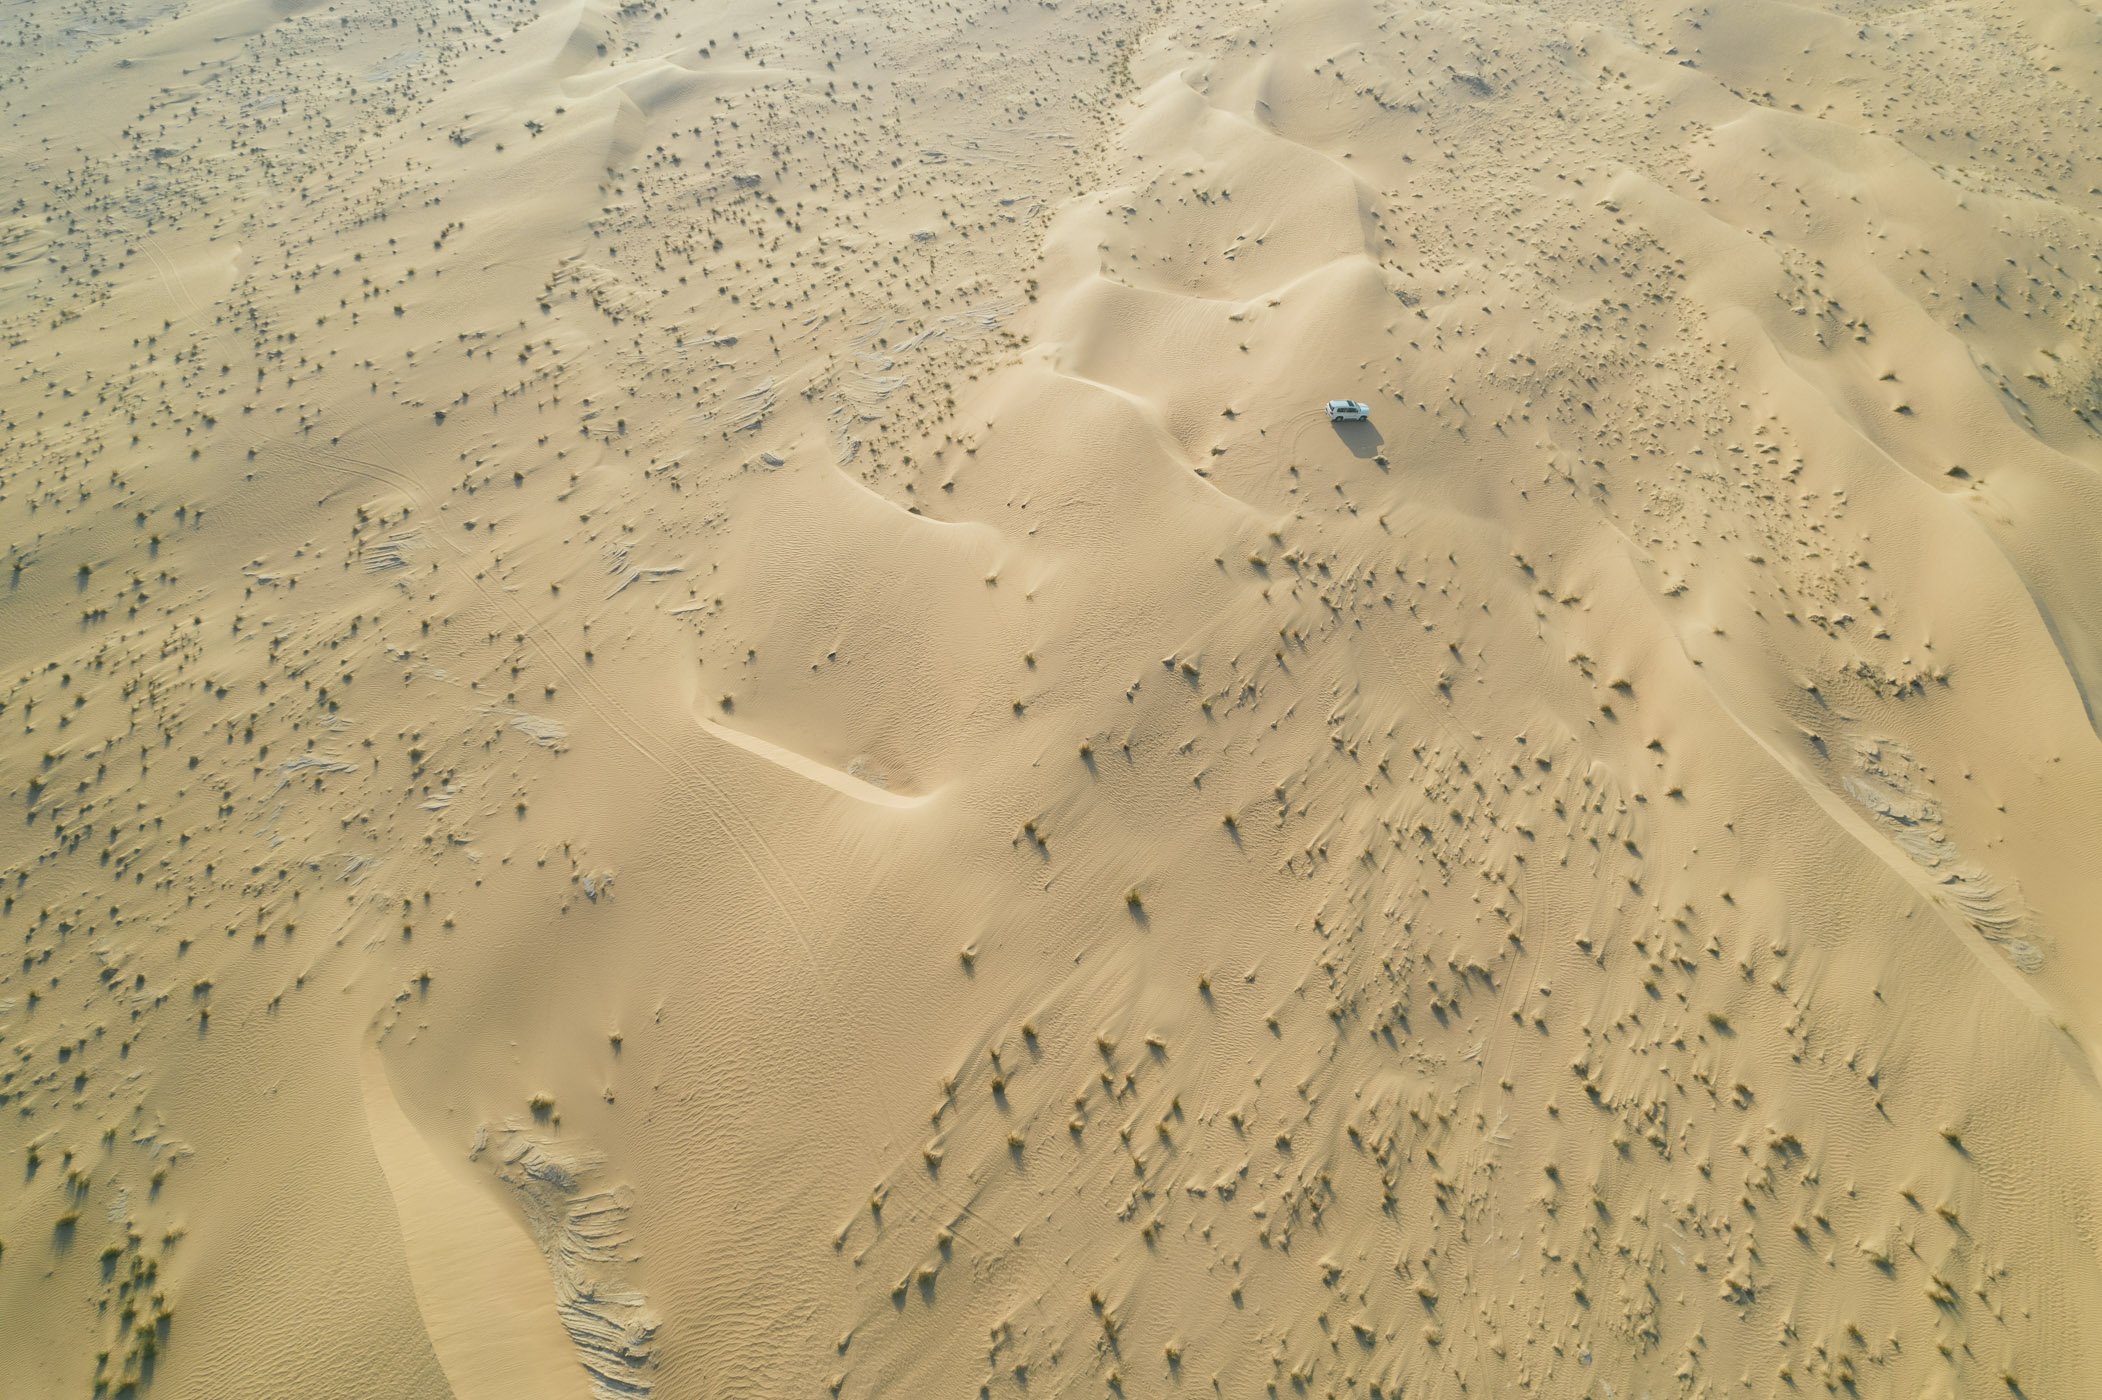 Offroad desert tour in Dubai